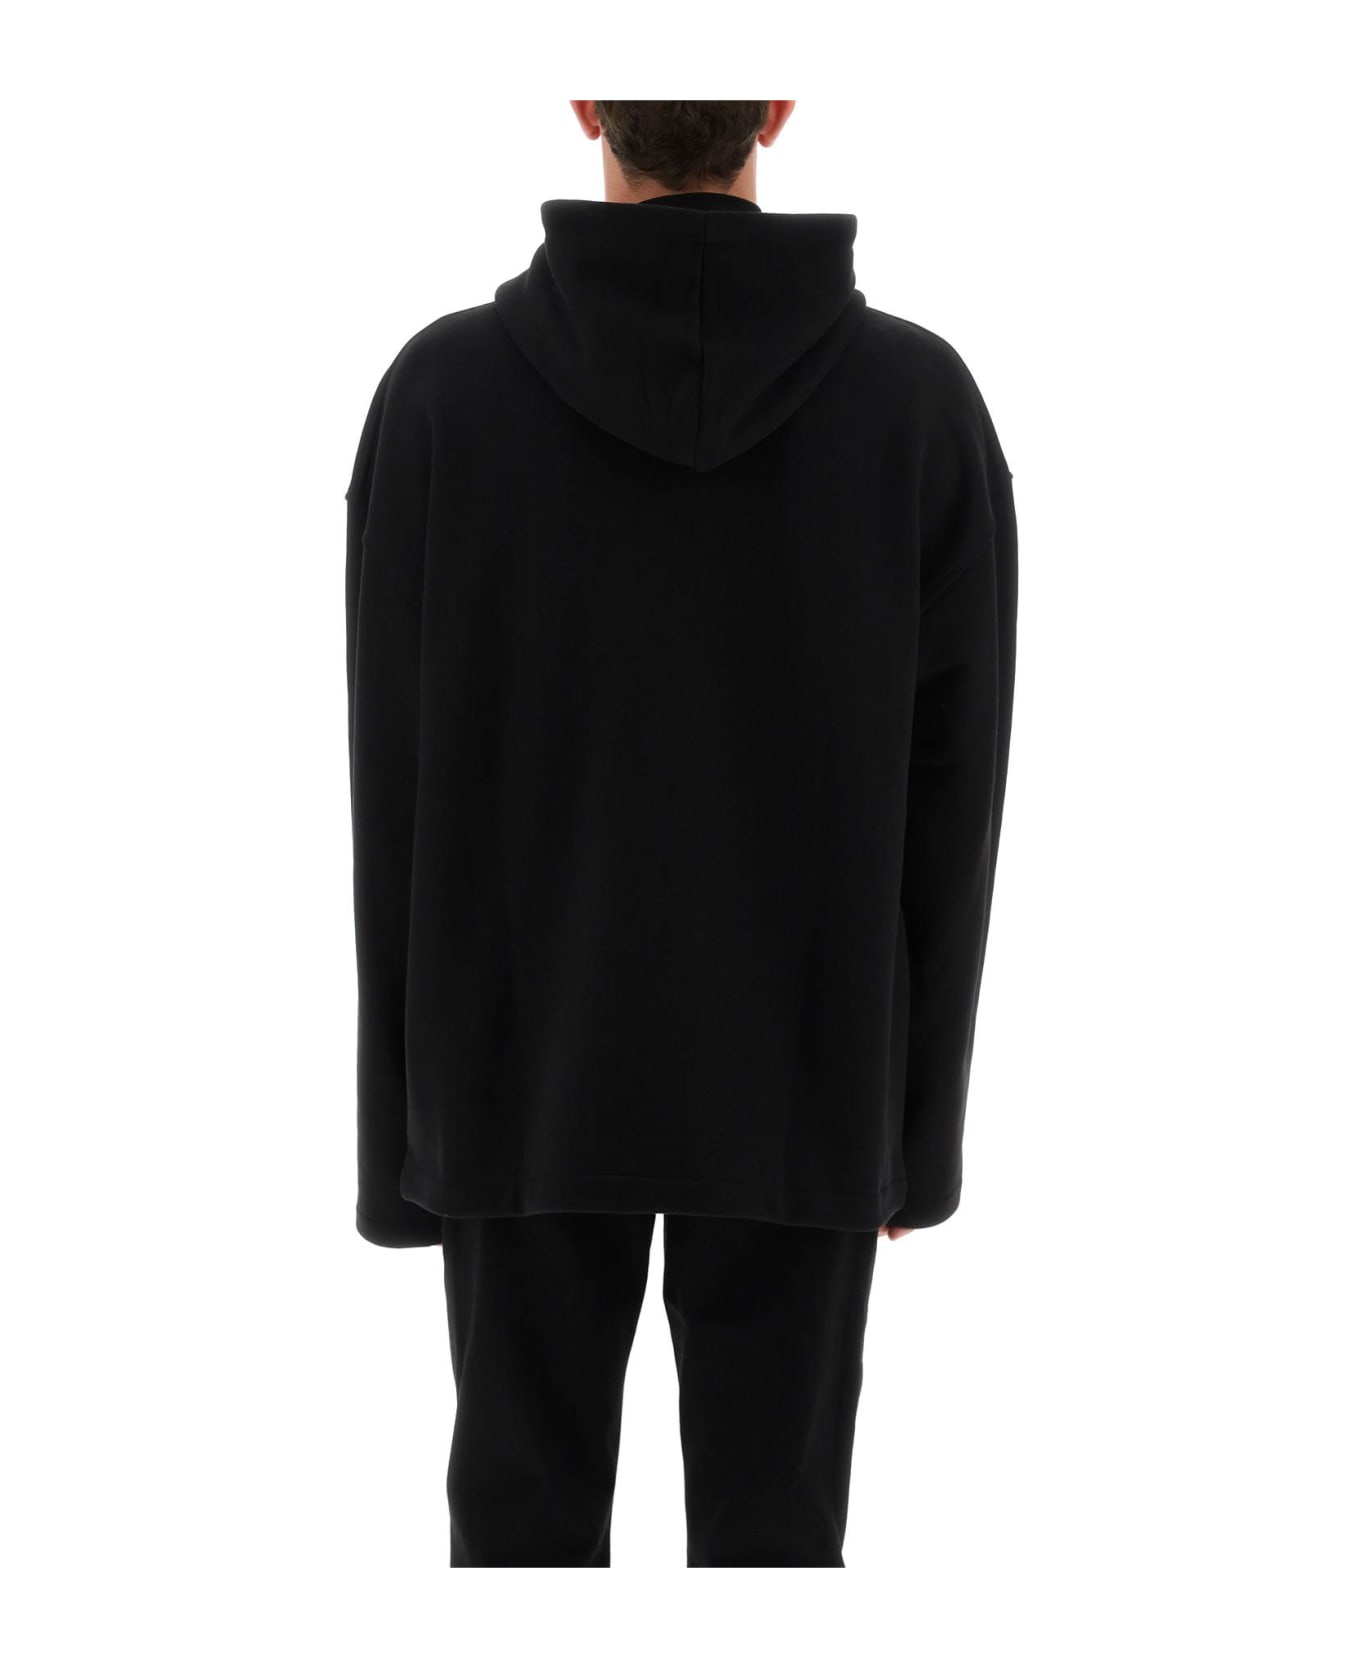 032c Hooded Sweatshirt With Mask Embroidery - BLACK (Black)